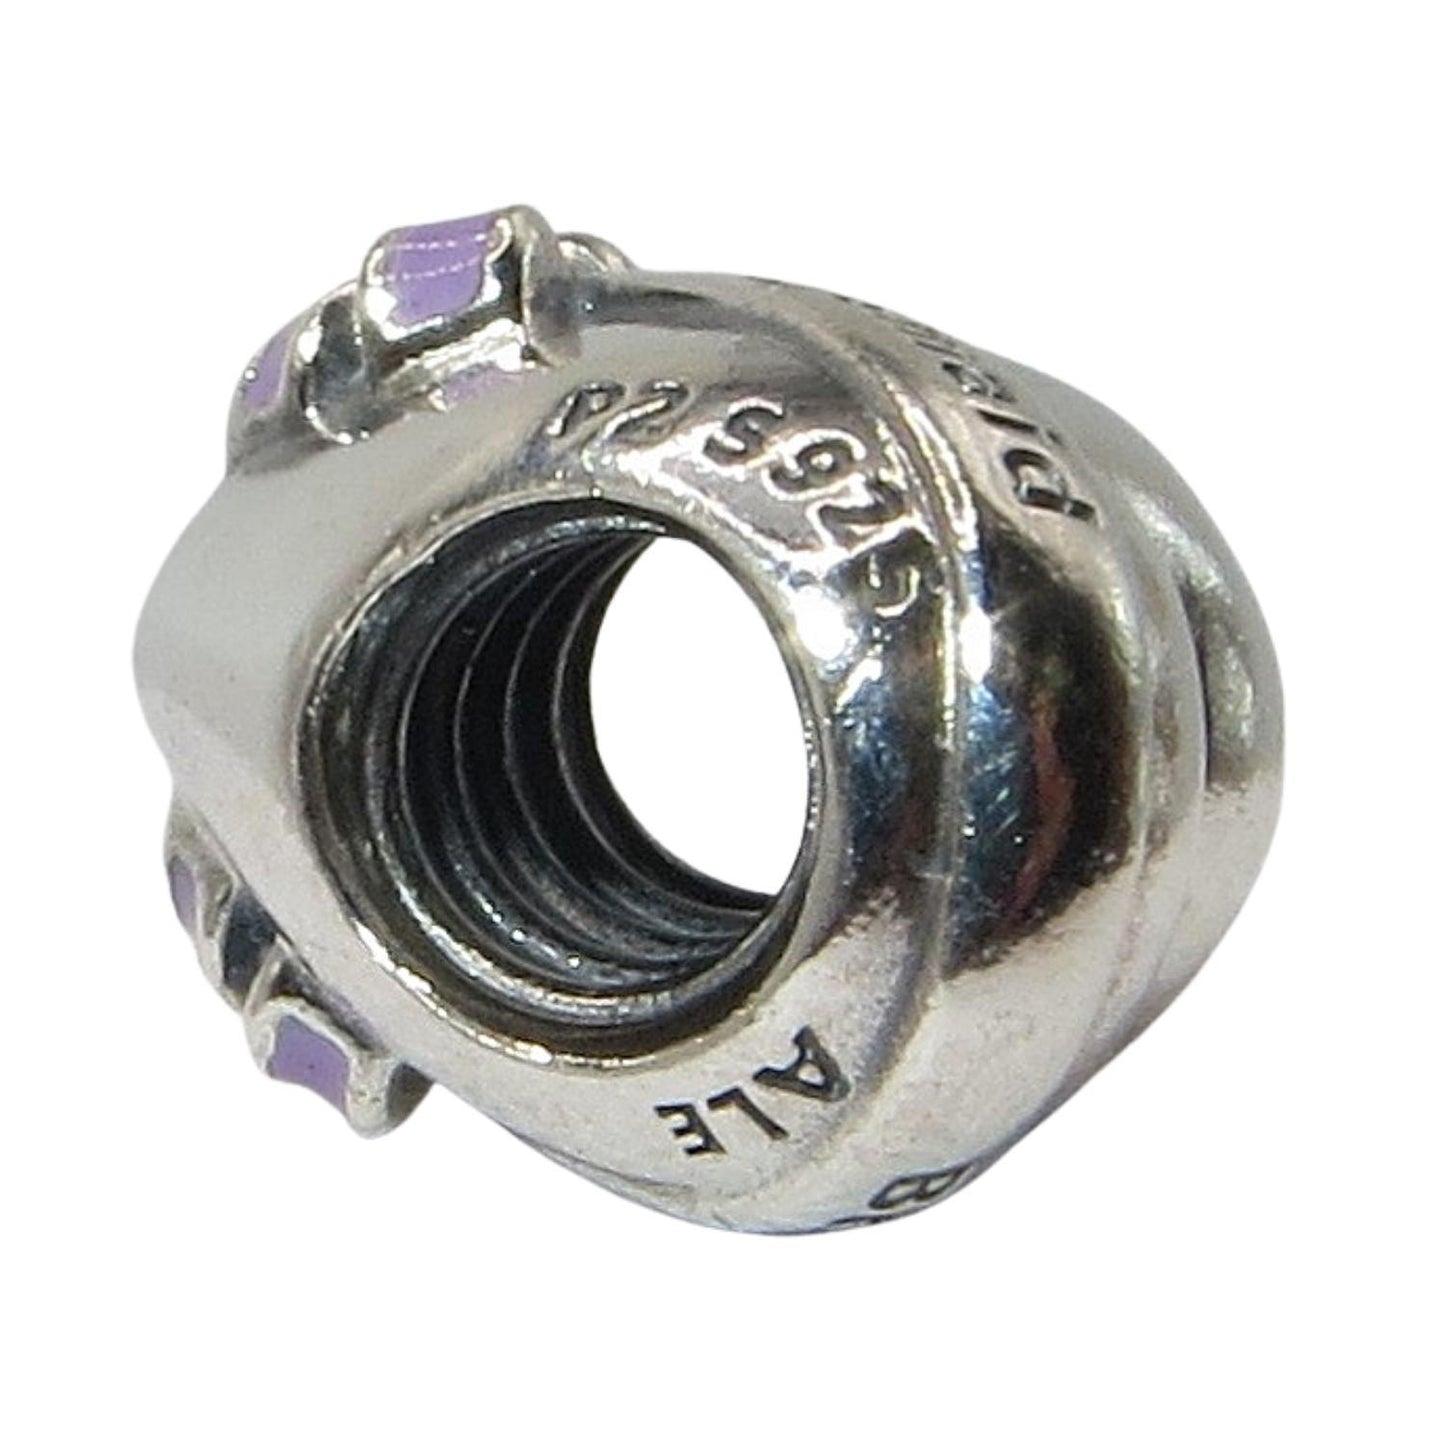 PANDORA  797272EN159 Bridesmaid - Sterling Silver Heart-Shaped Charm encircled by Ribbon Inscribed "Bridesmaid" and a Bow - Perfect Bridesmaid Gift! - Women's Charm